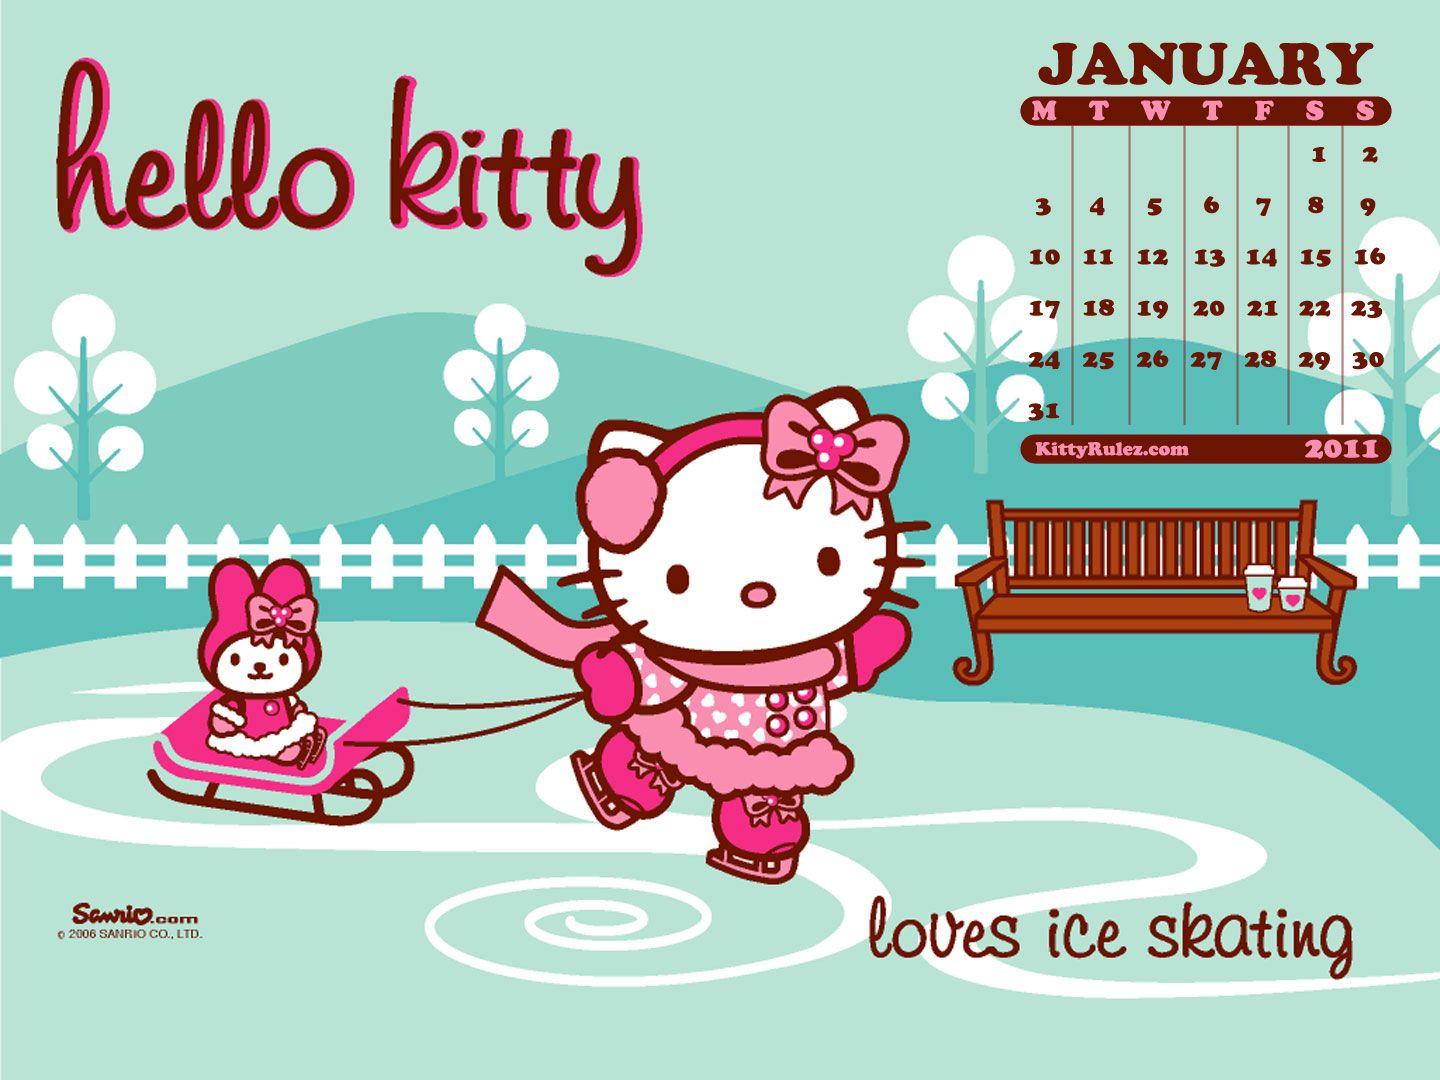 KittyRulez exclusive Hello Kitty desktop calendar wallpaper! =